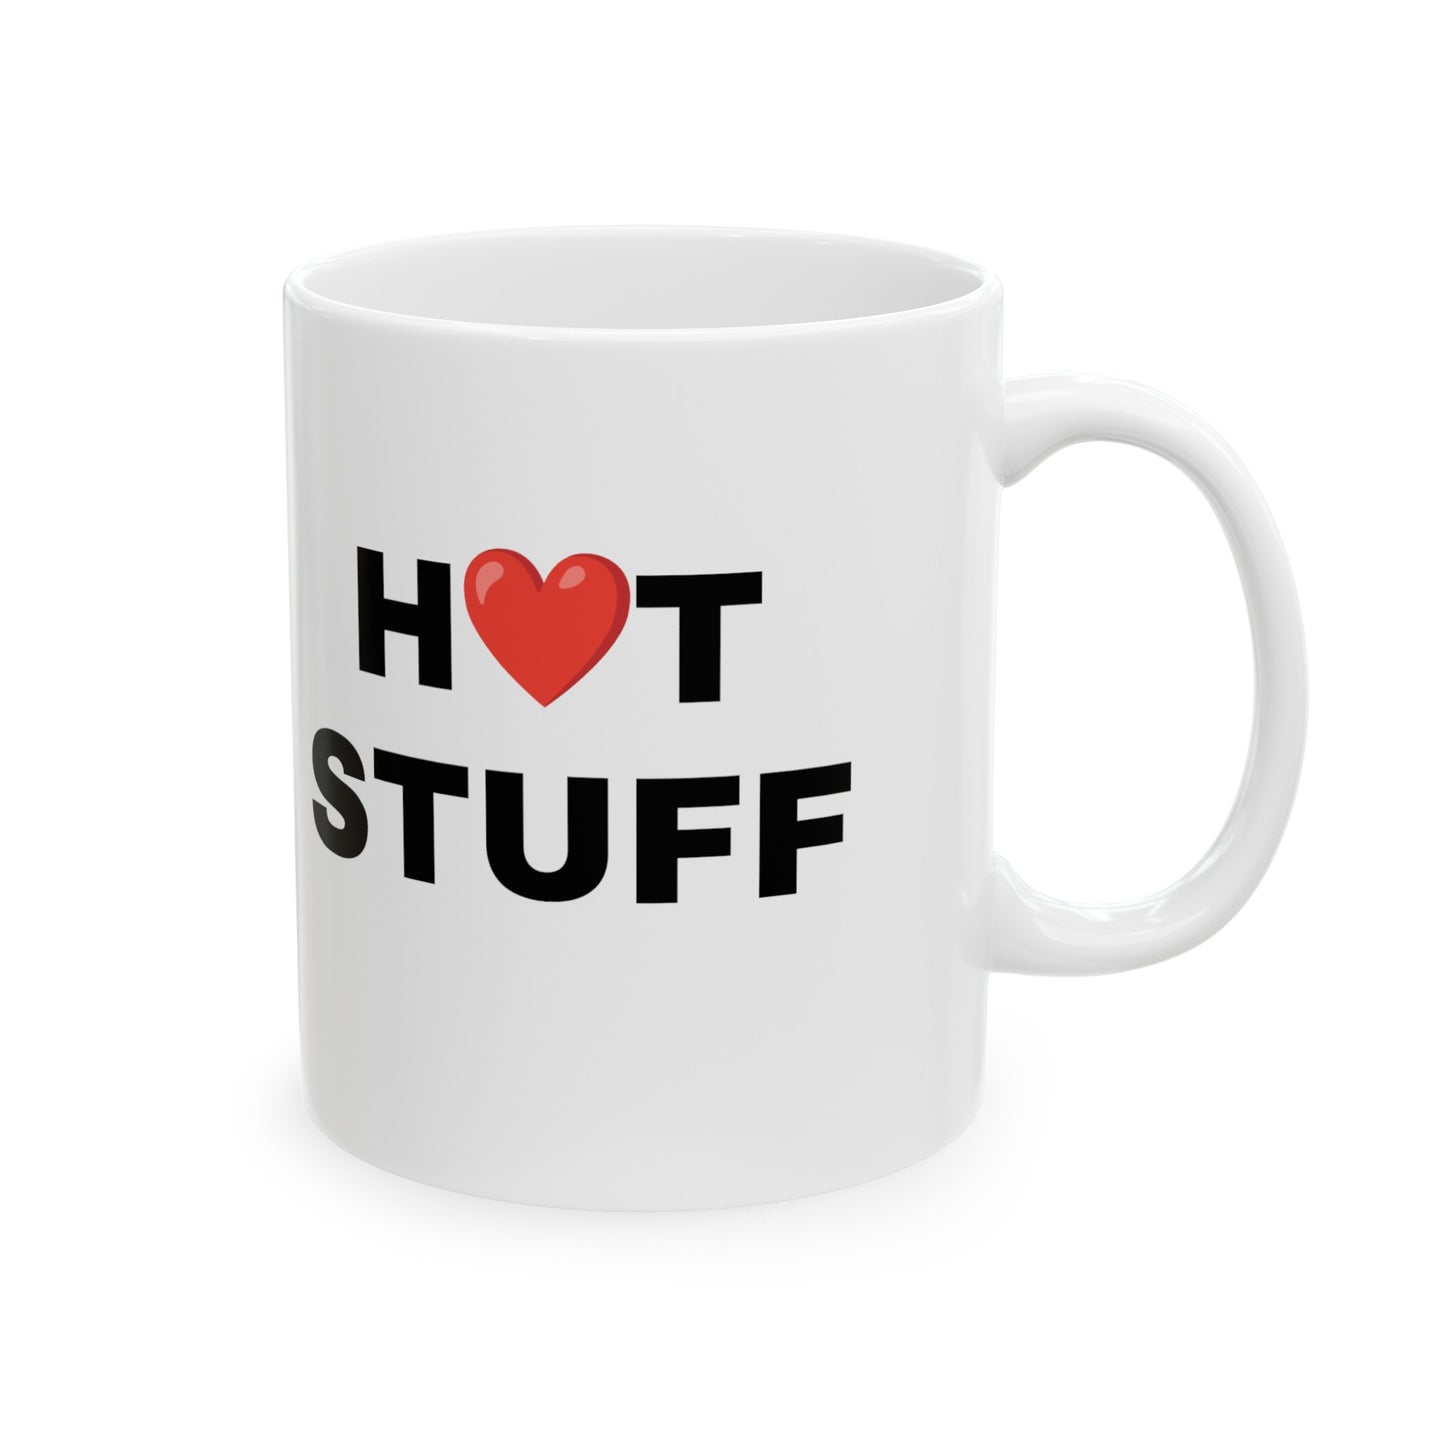 HOT STUFF - Ceramic Mug 11oz